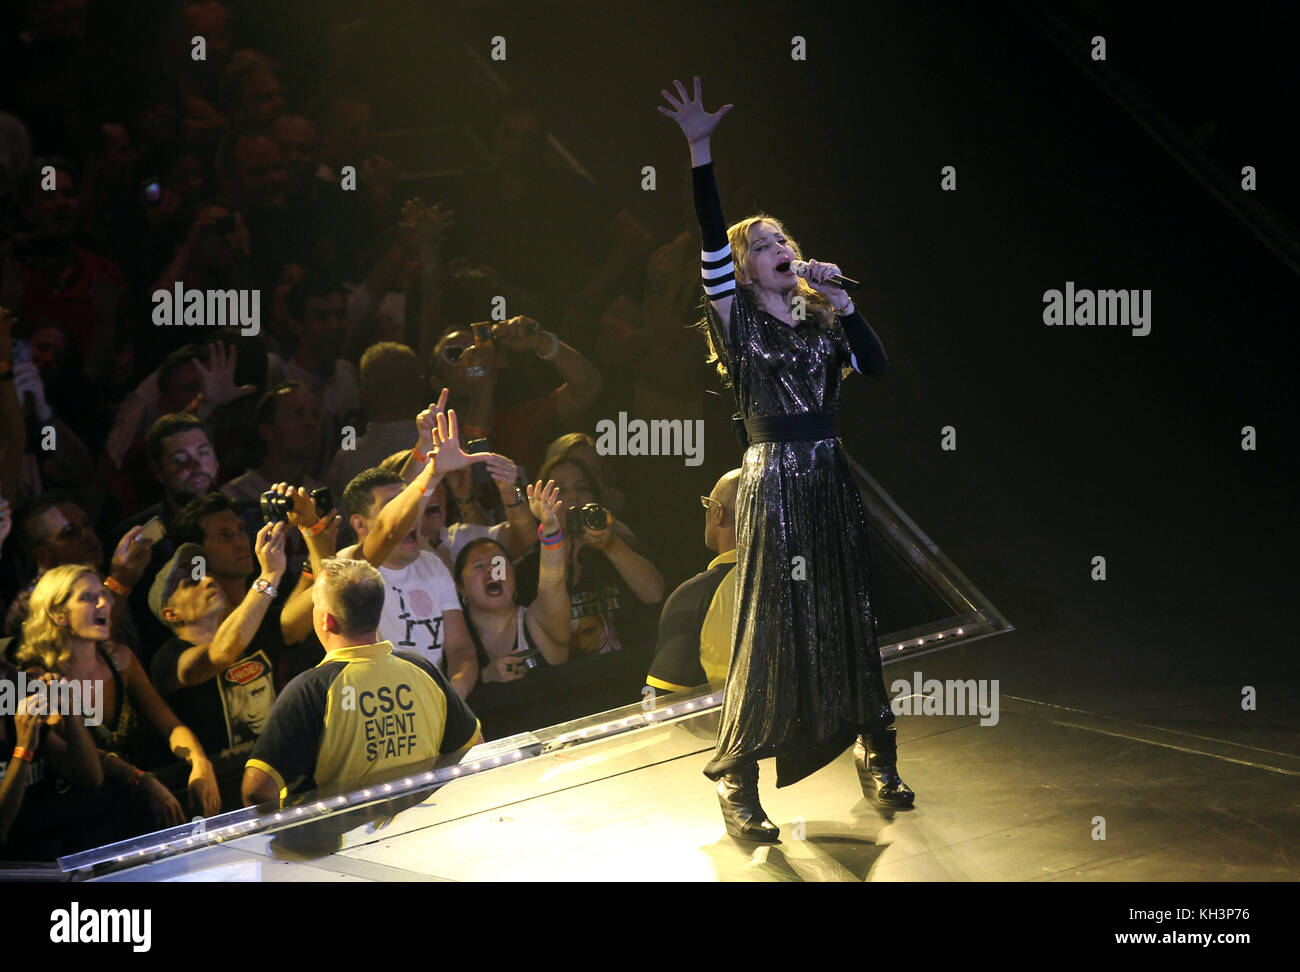 WASHINGTON, DC - SEPTEMBER 23: Madonna performs during her MDNA Tour at the Verizon Center in Washington, D.C. September 23, 2012. © mpi34/MediaPunch Inc. Stock Photo